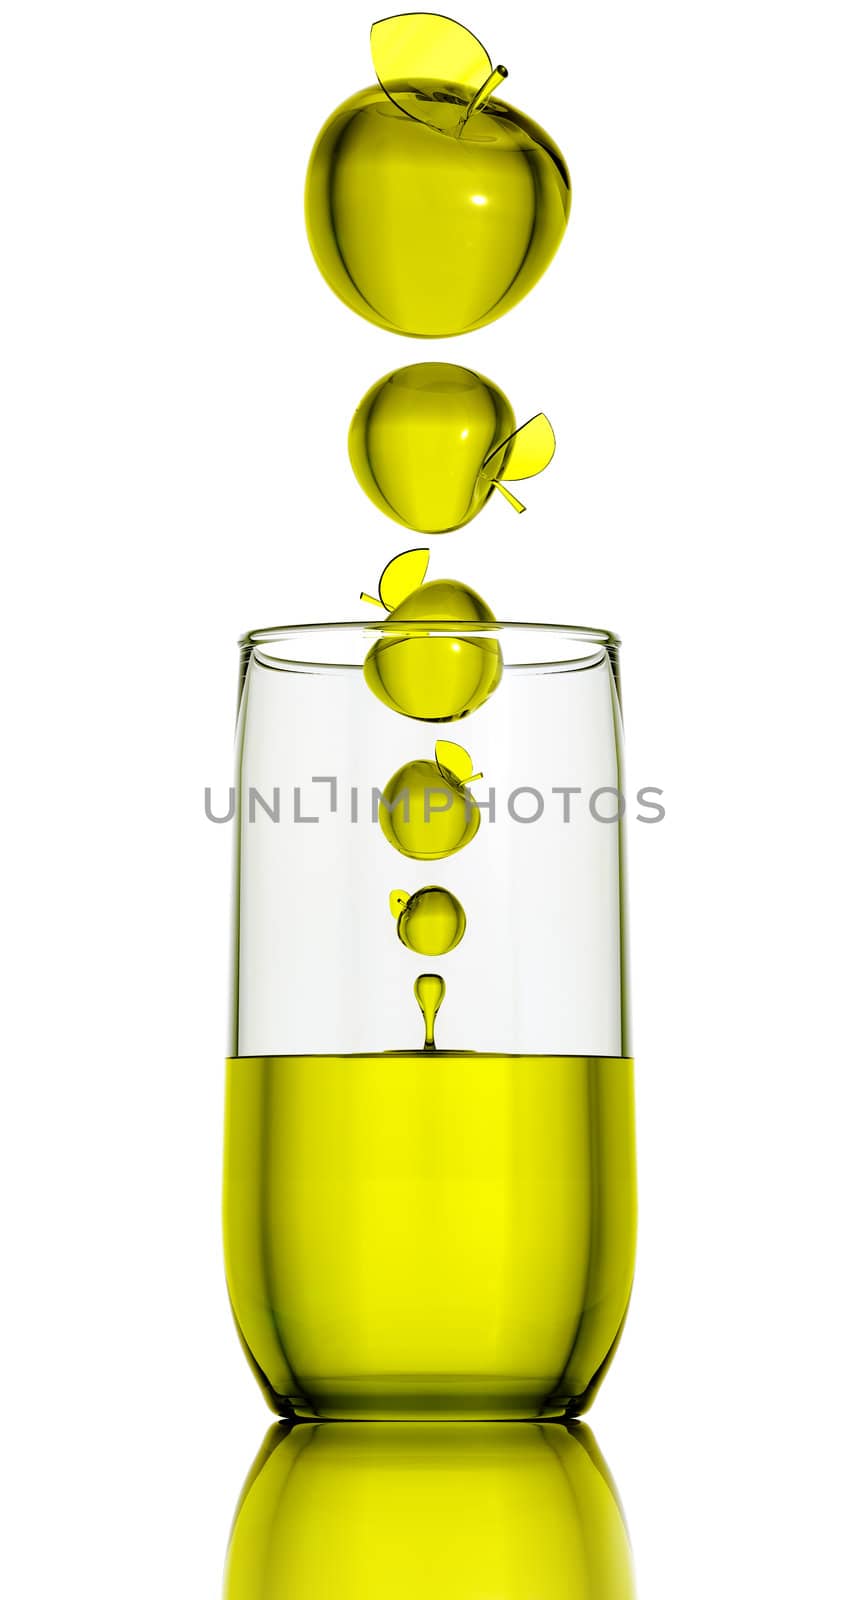 Apple juice. Transparent apples falling into glass. Natural food conceptual image. 3d